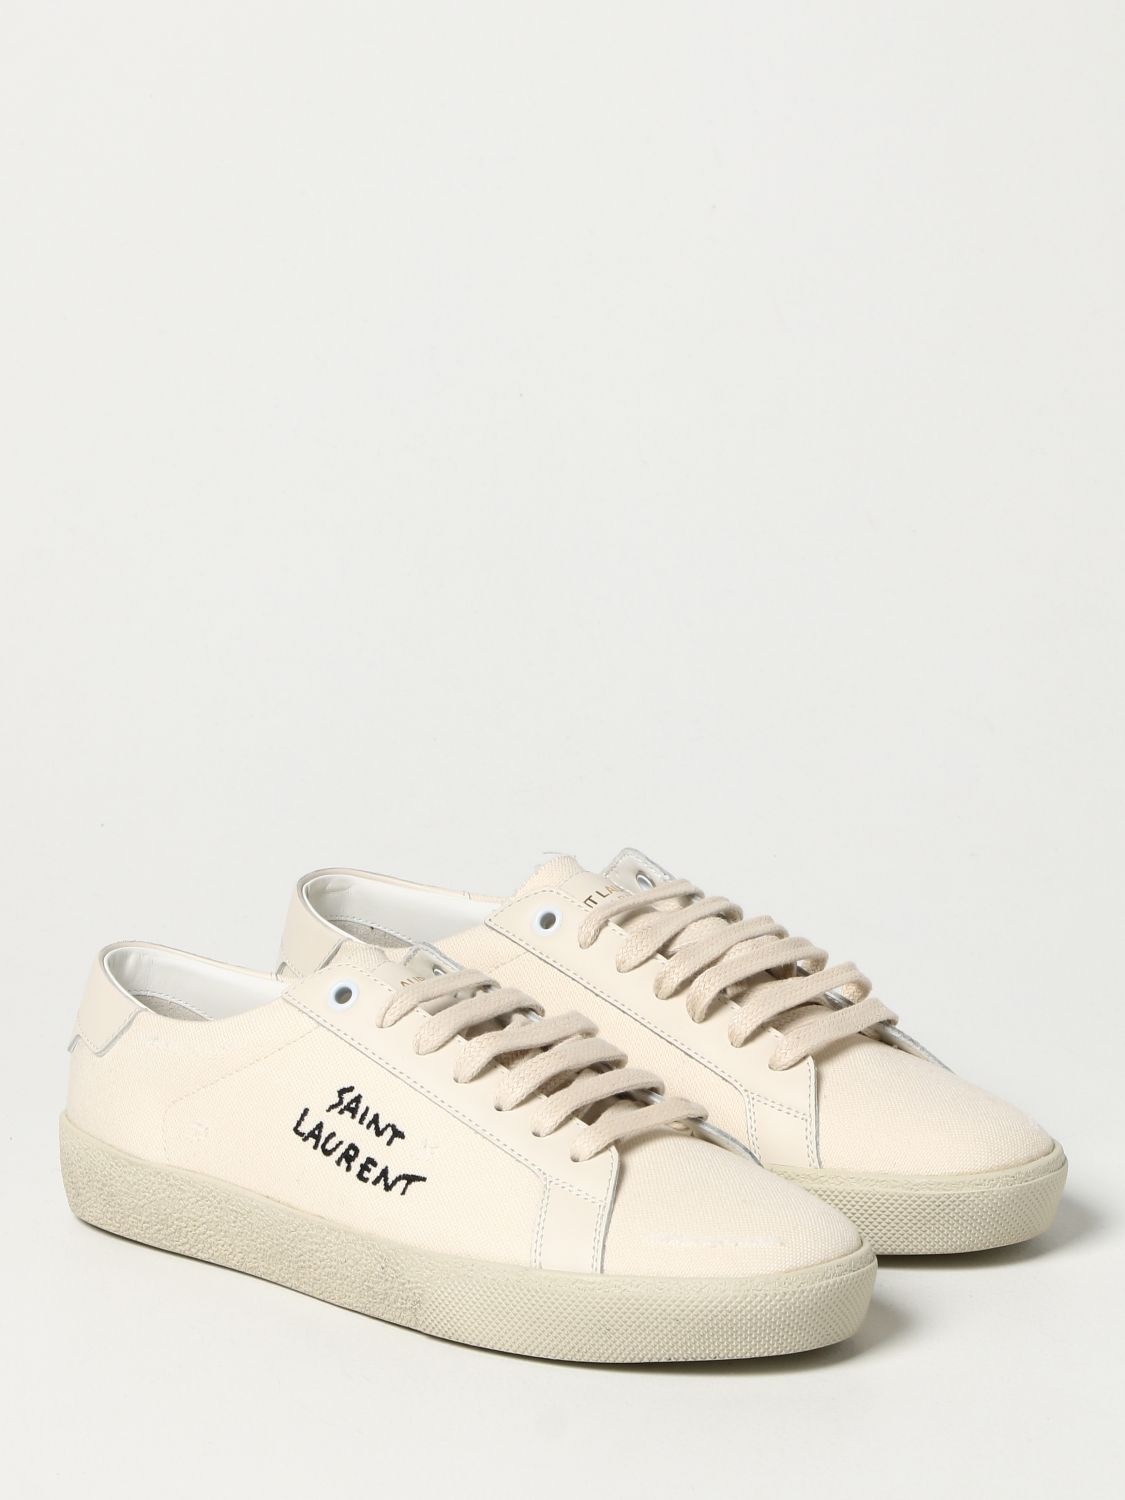 Zapatillas Saint Laurent: Zapatos mujer Saint Laurent blanco 2